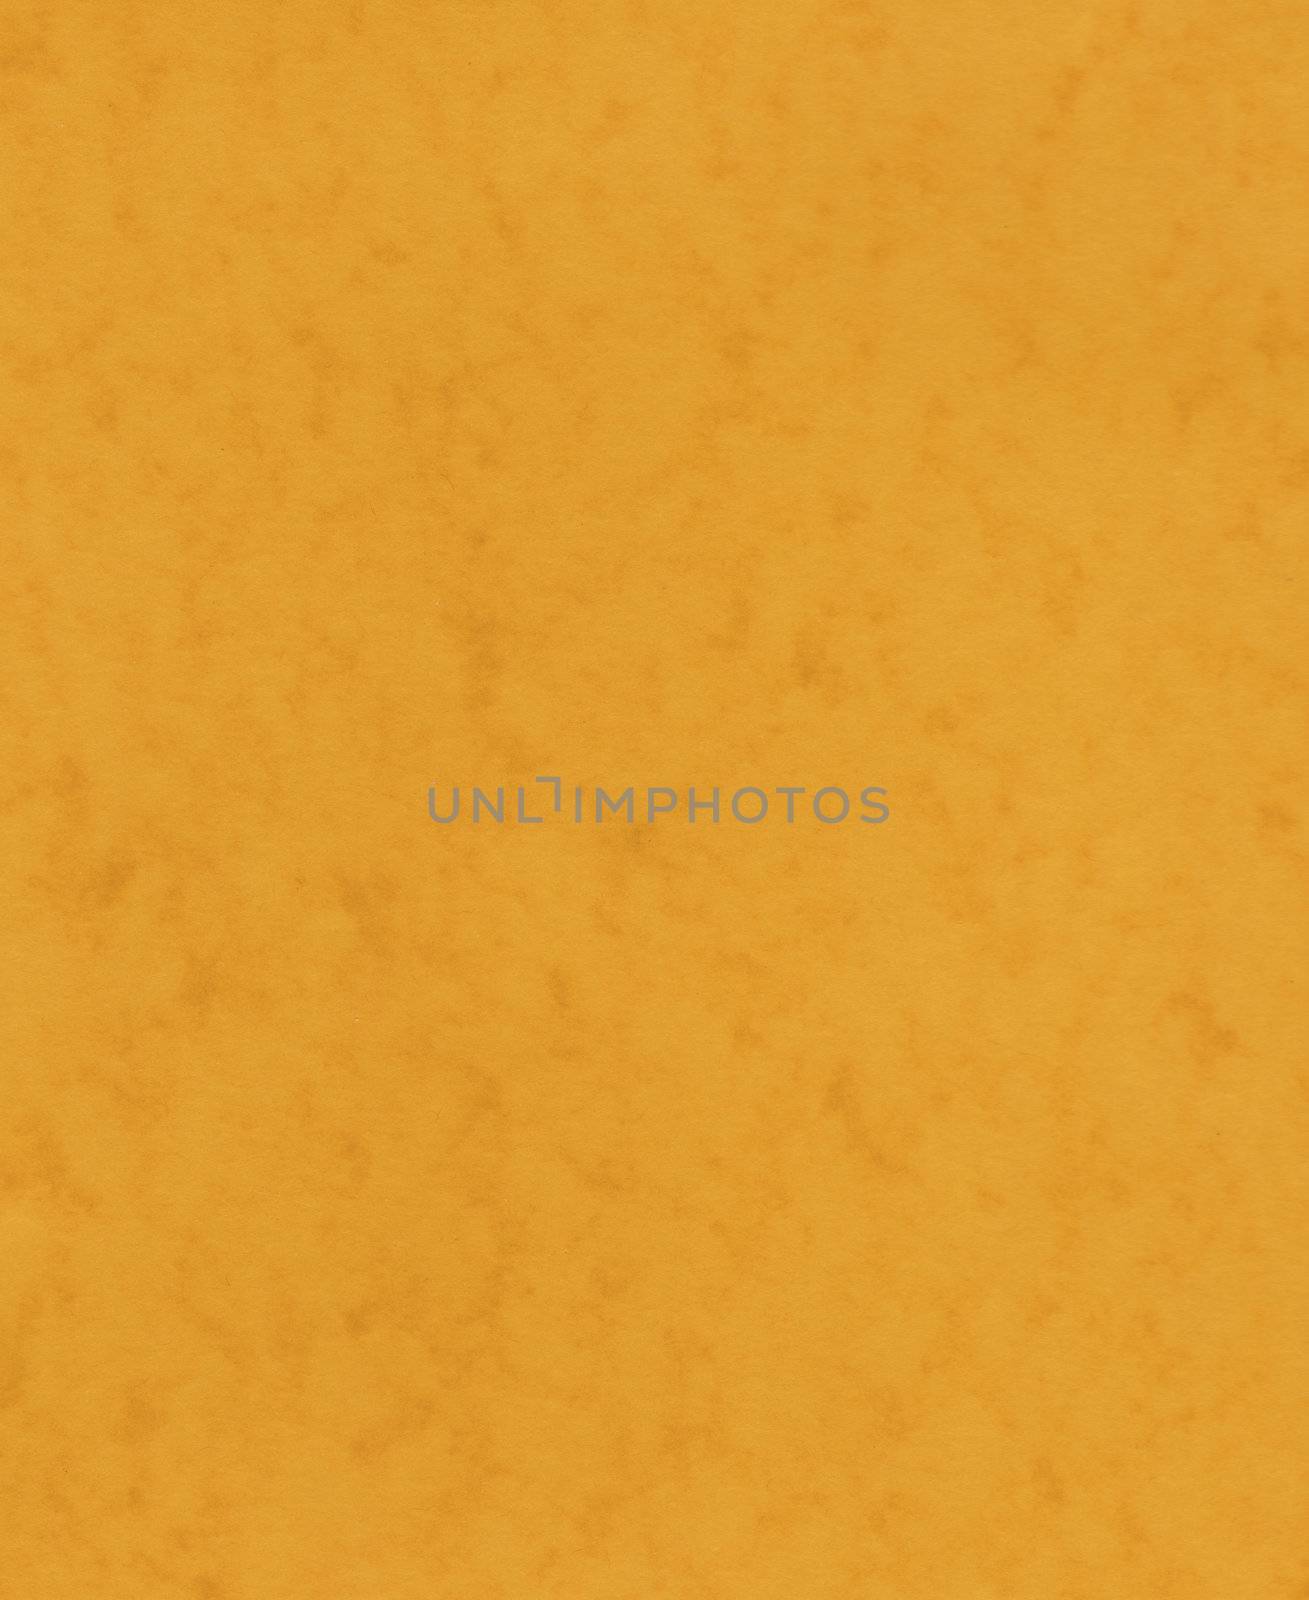 Dirty orange paper - empty background